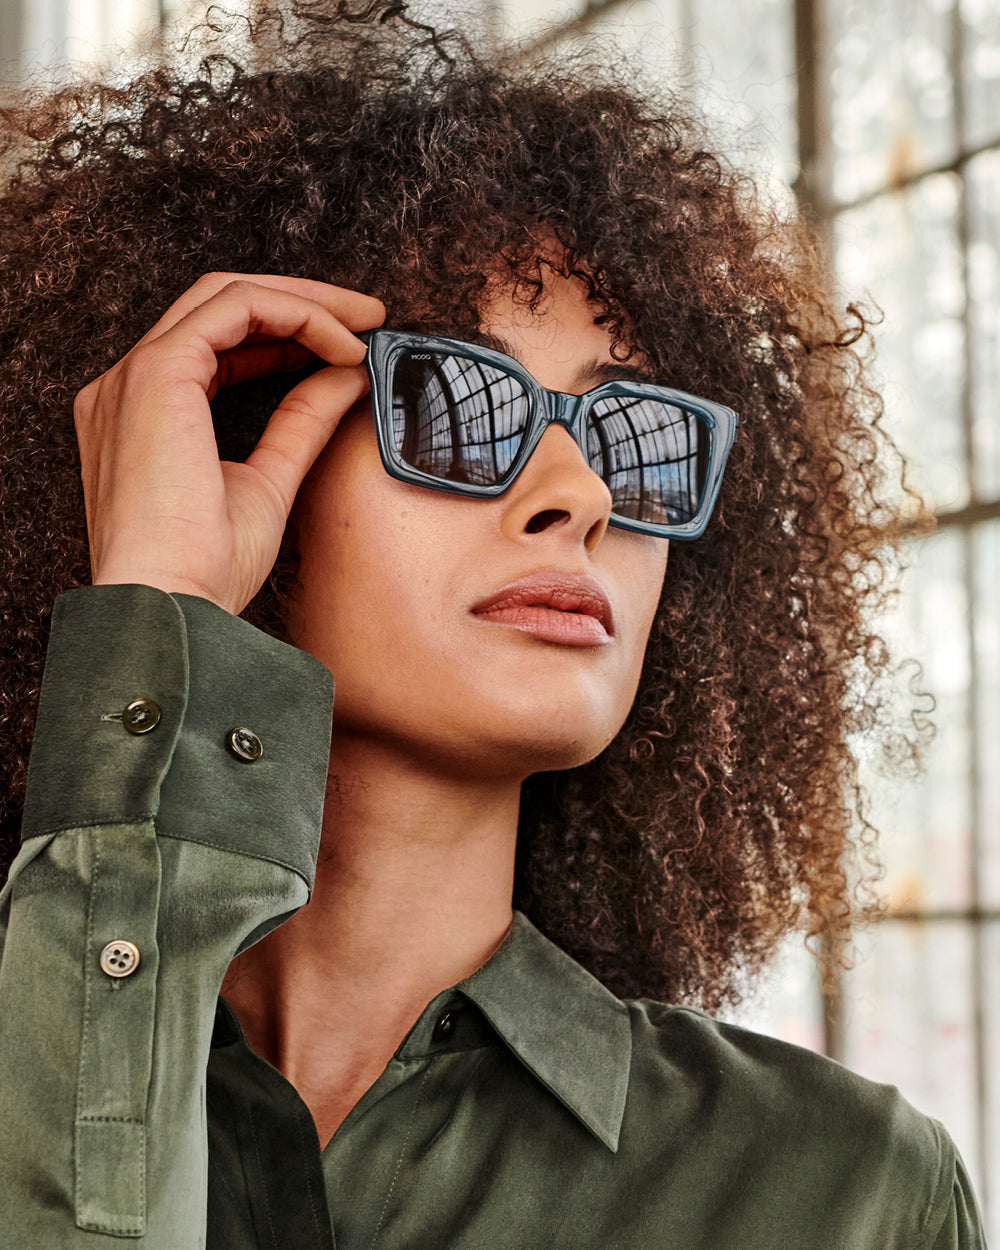 18 Sunglasses Brands: The Top Names in Eyewear